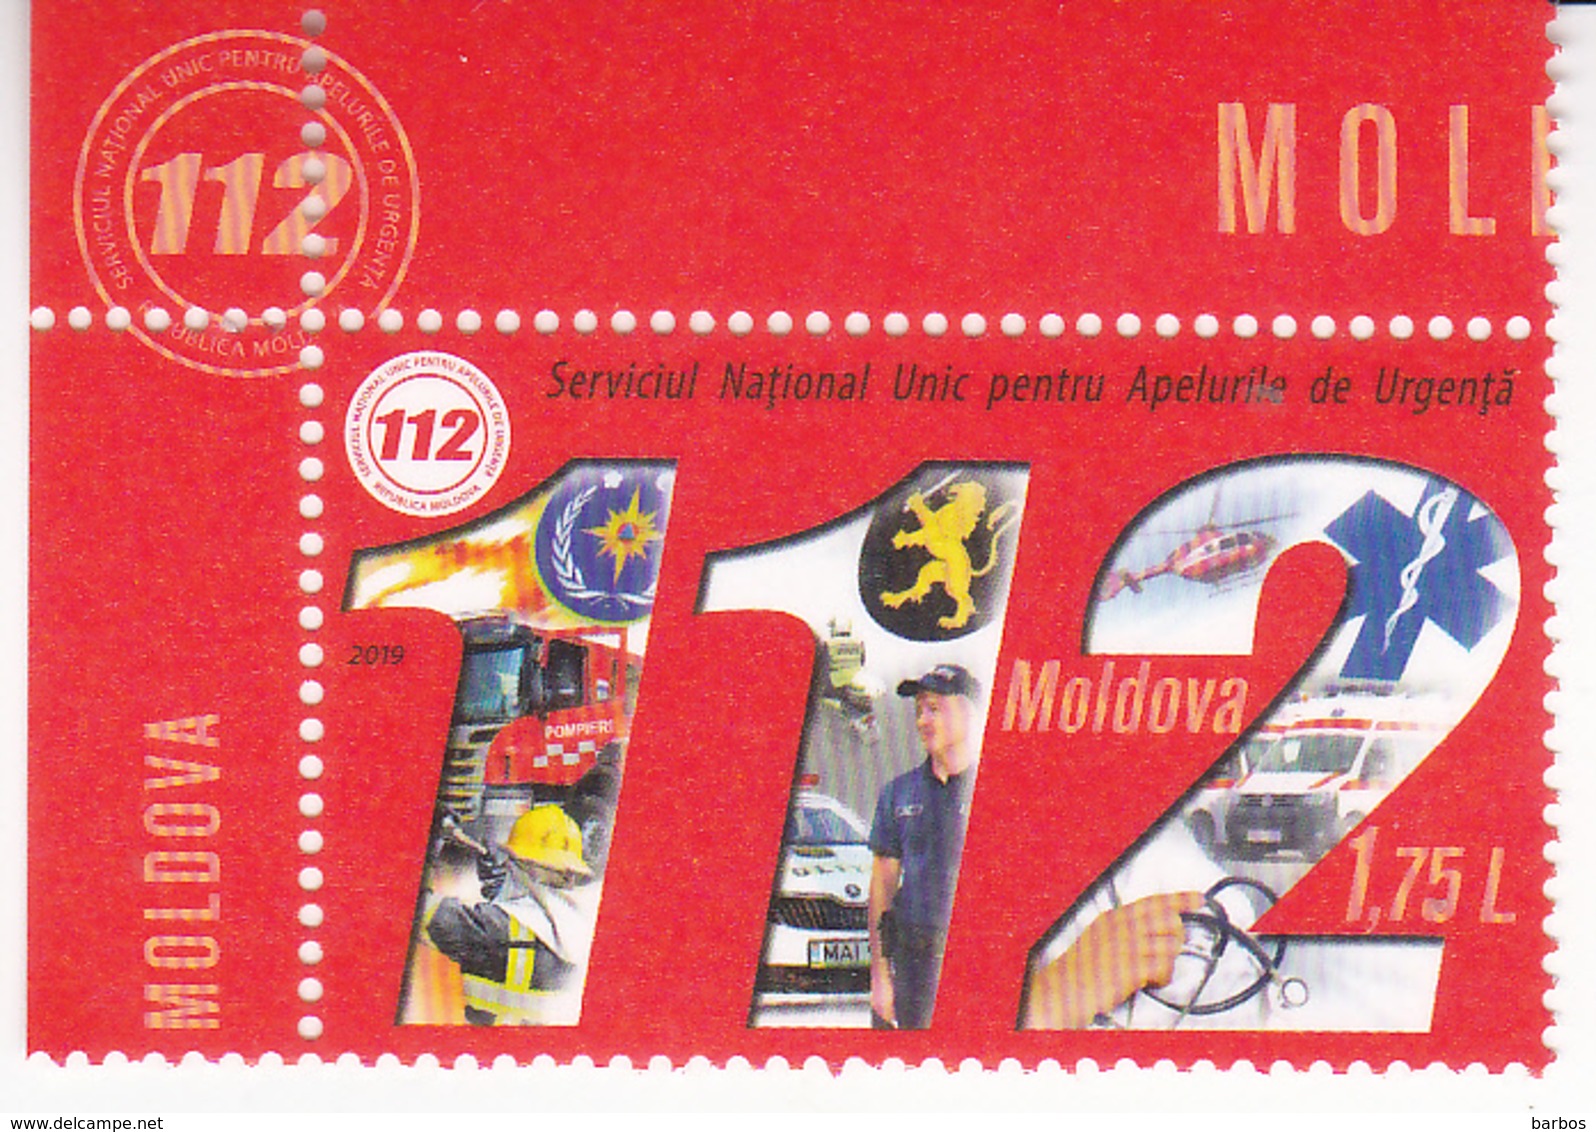 2019 , Moldova  Moldavie  Moldawien  Moldau  , National Call Cervice - 112 , Medicine , Police , 1 V. , MNH - Moldavia